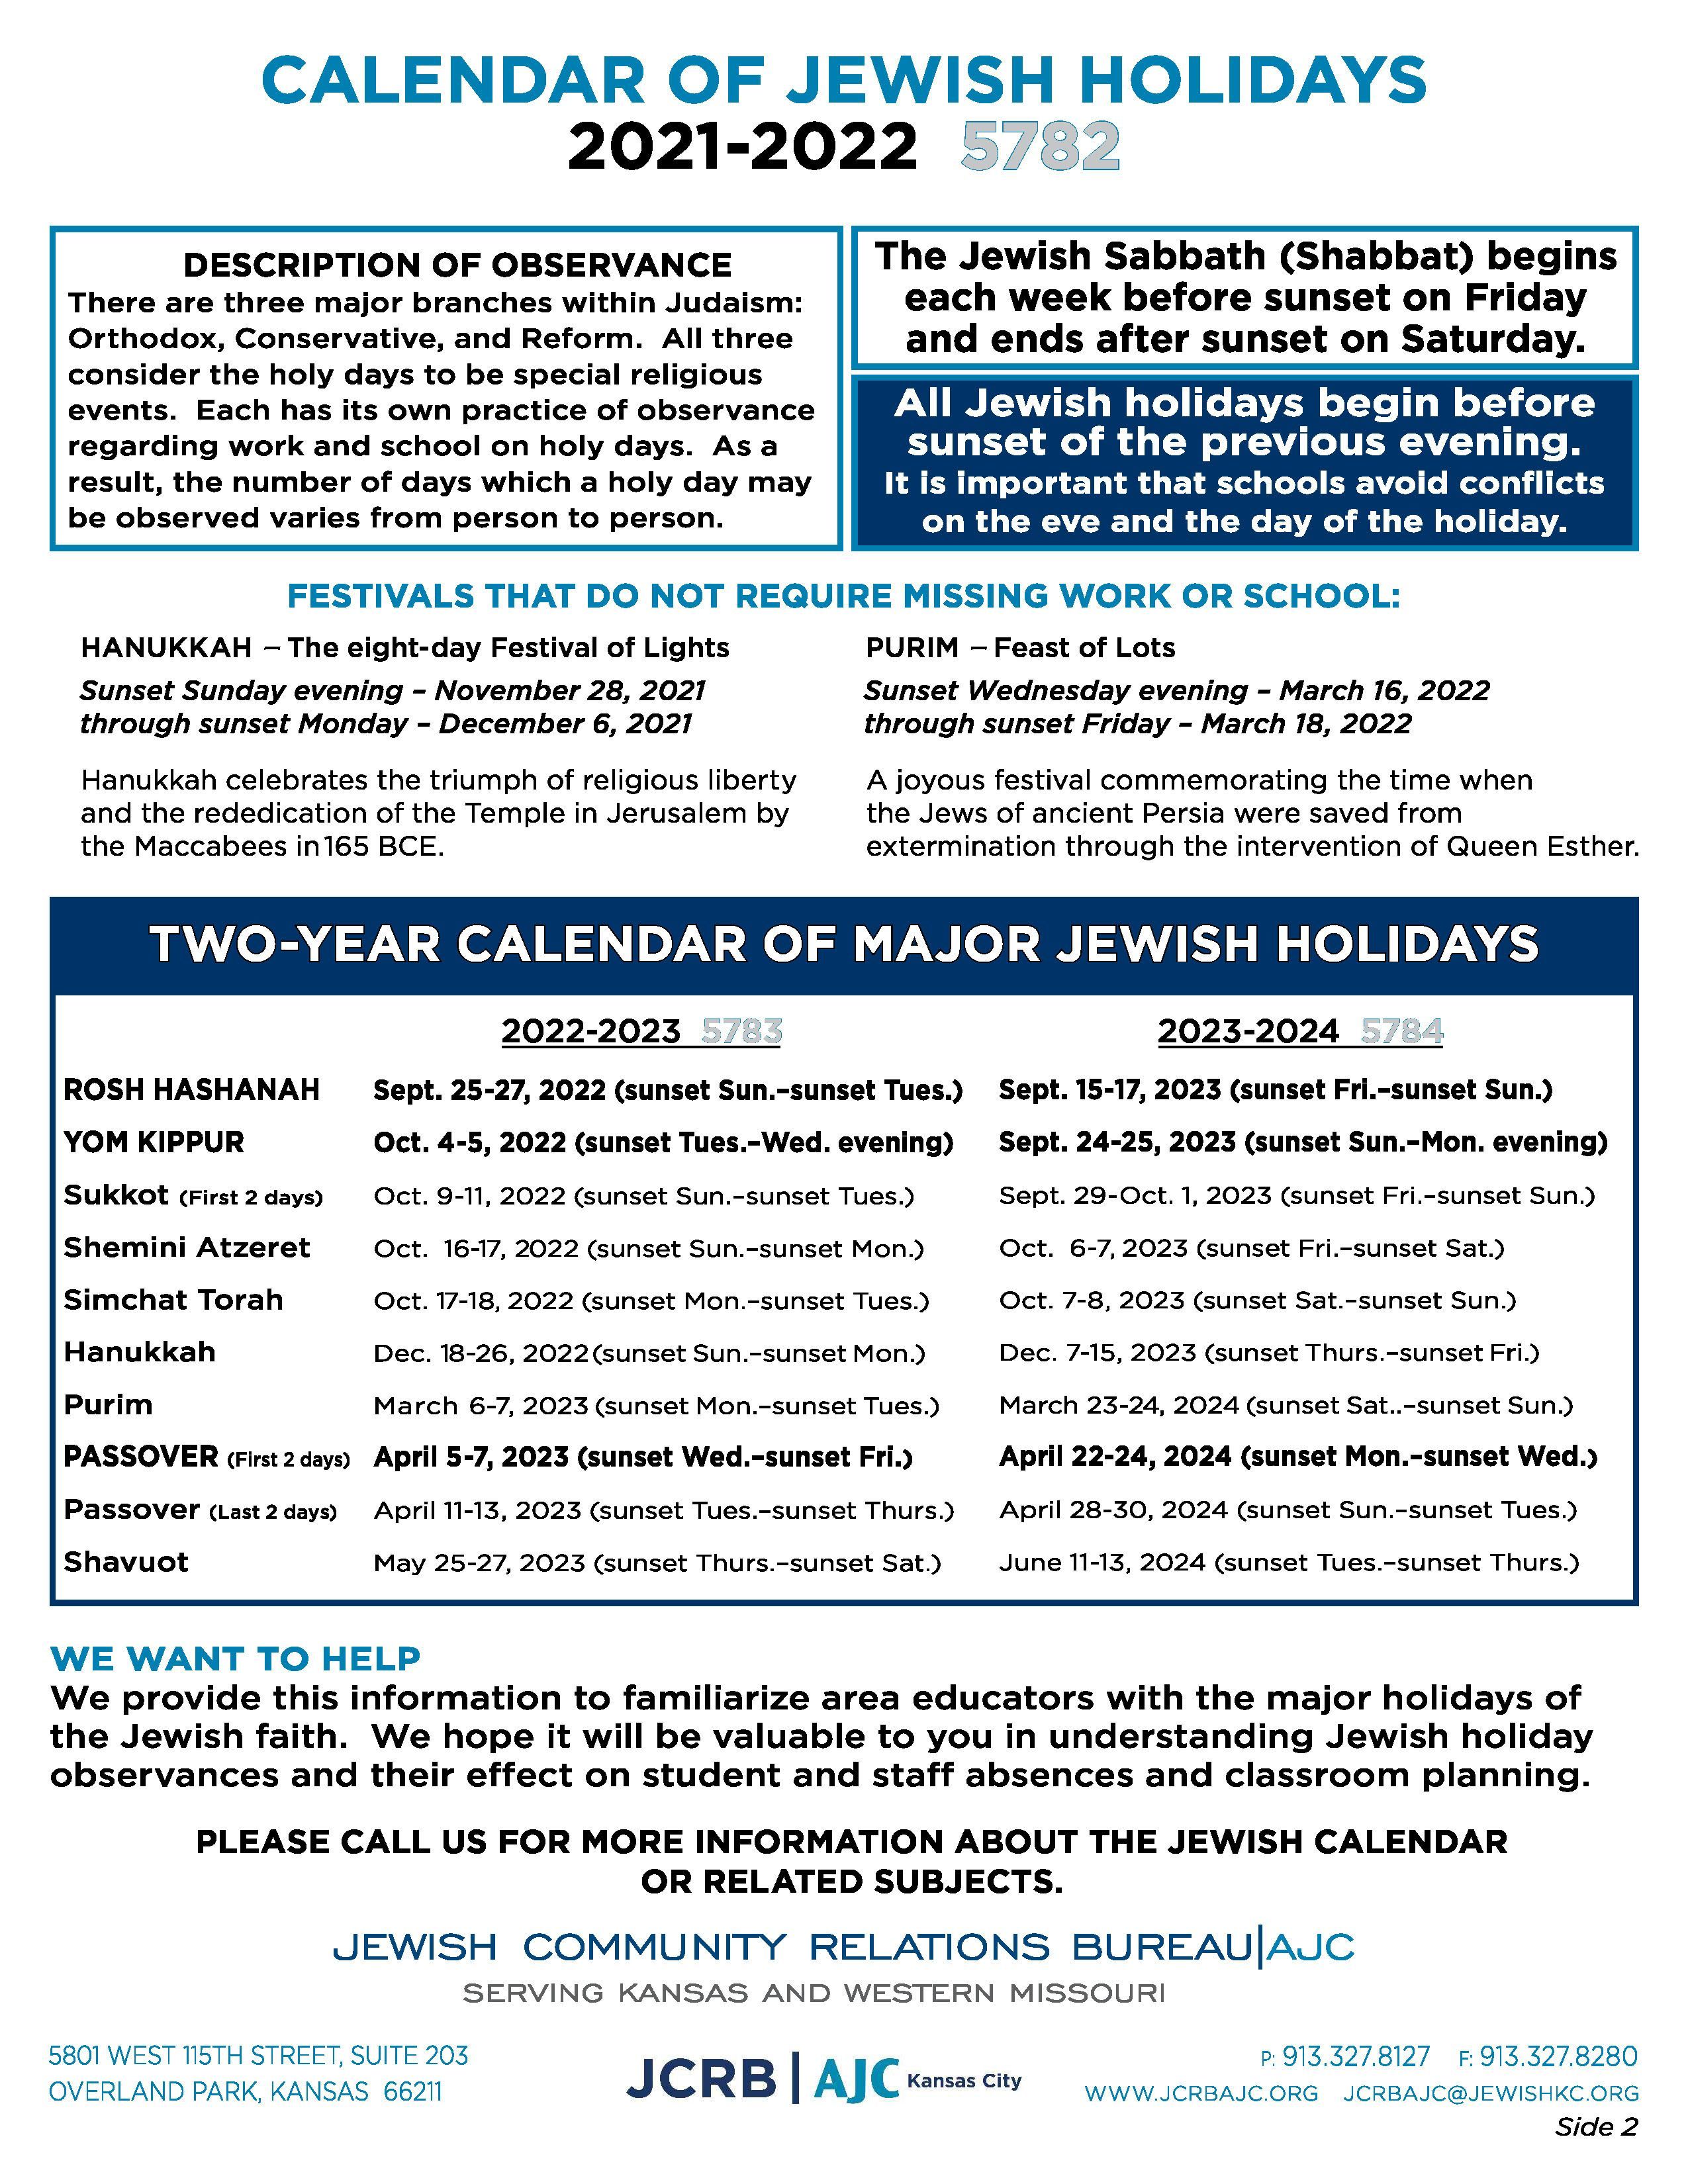 2021-2022 Calendar of Jewish Holidays